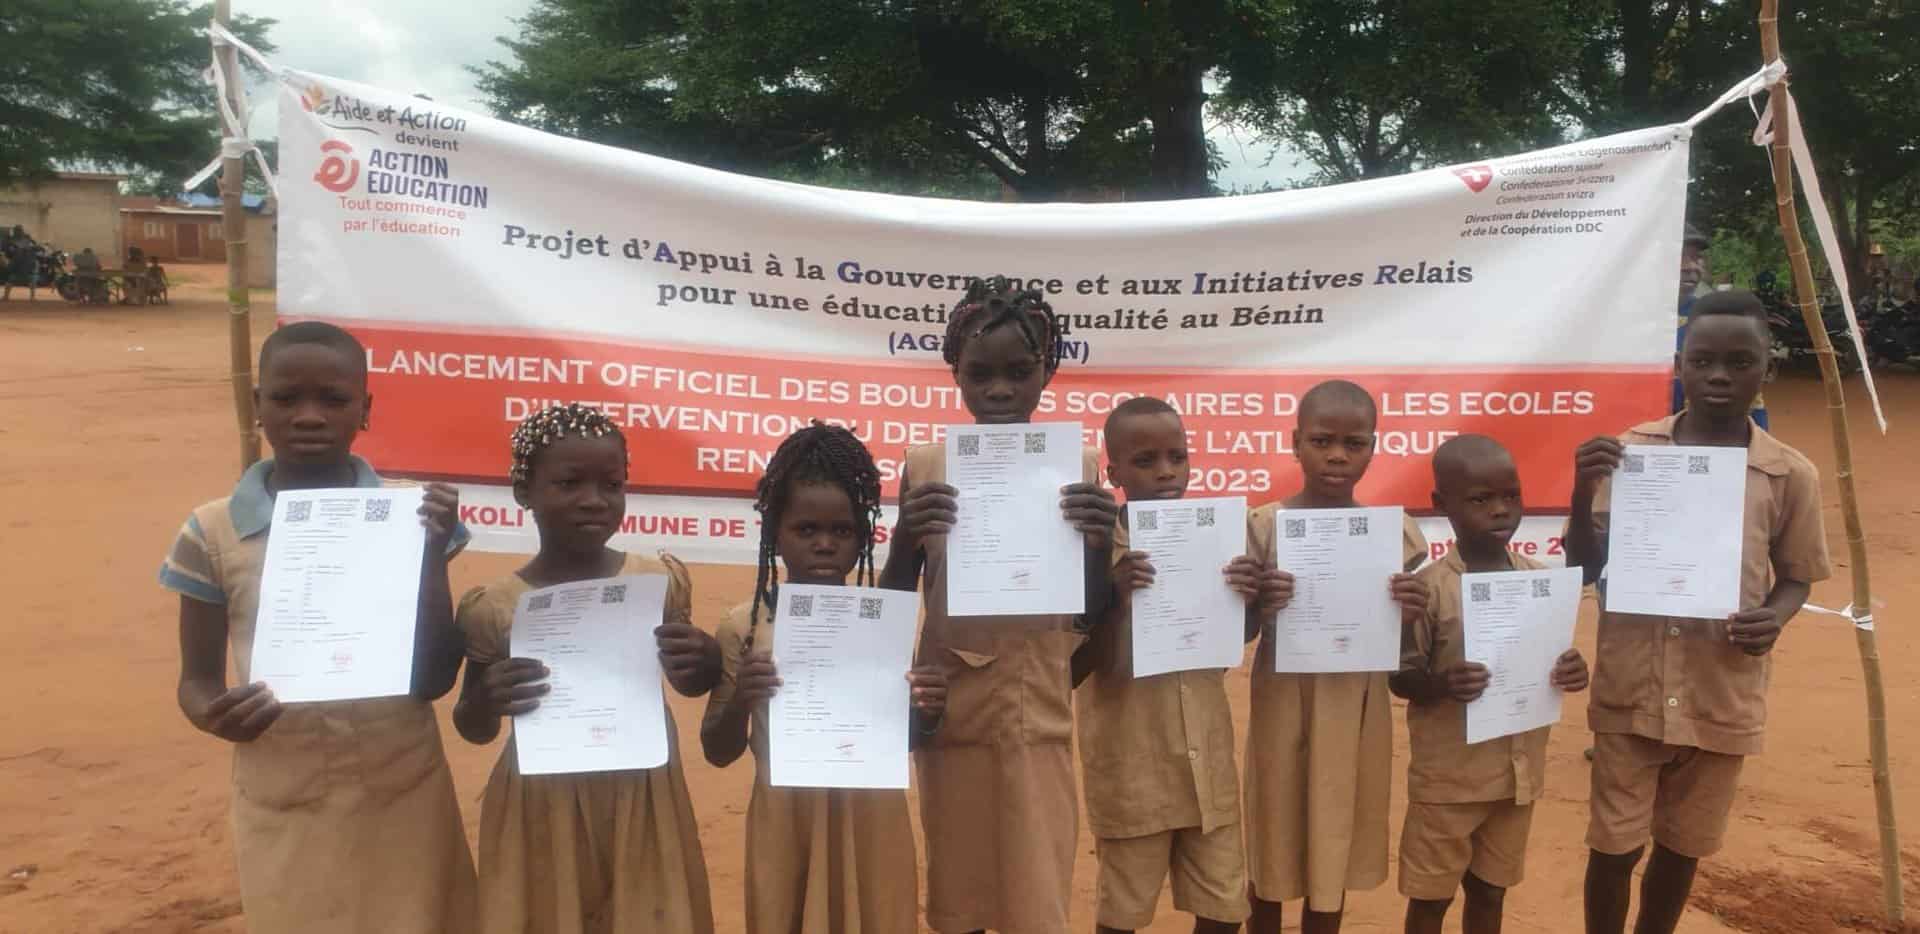 Benin: school supplies to equip disadvantaged pupils